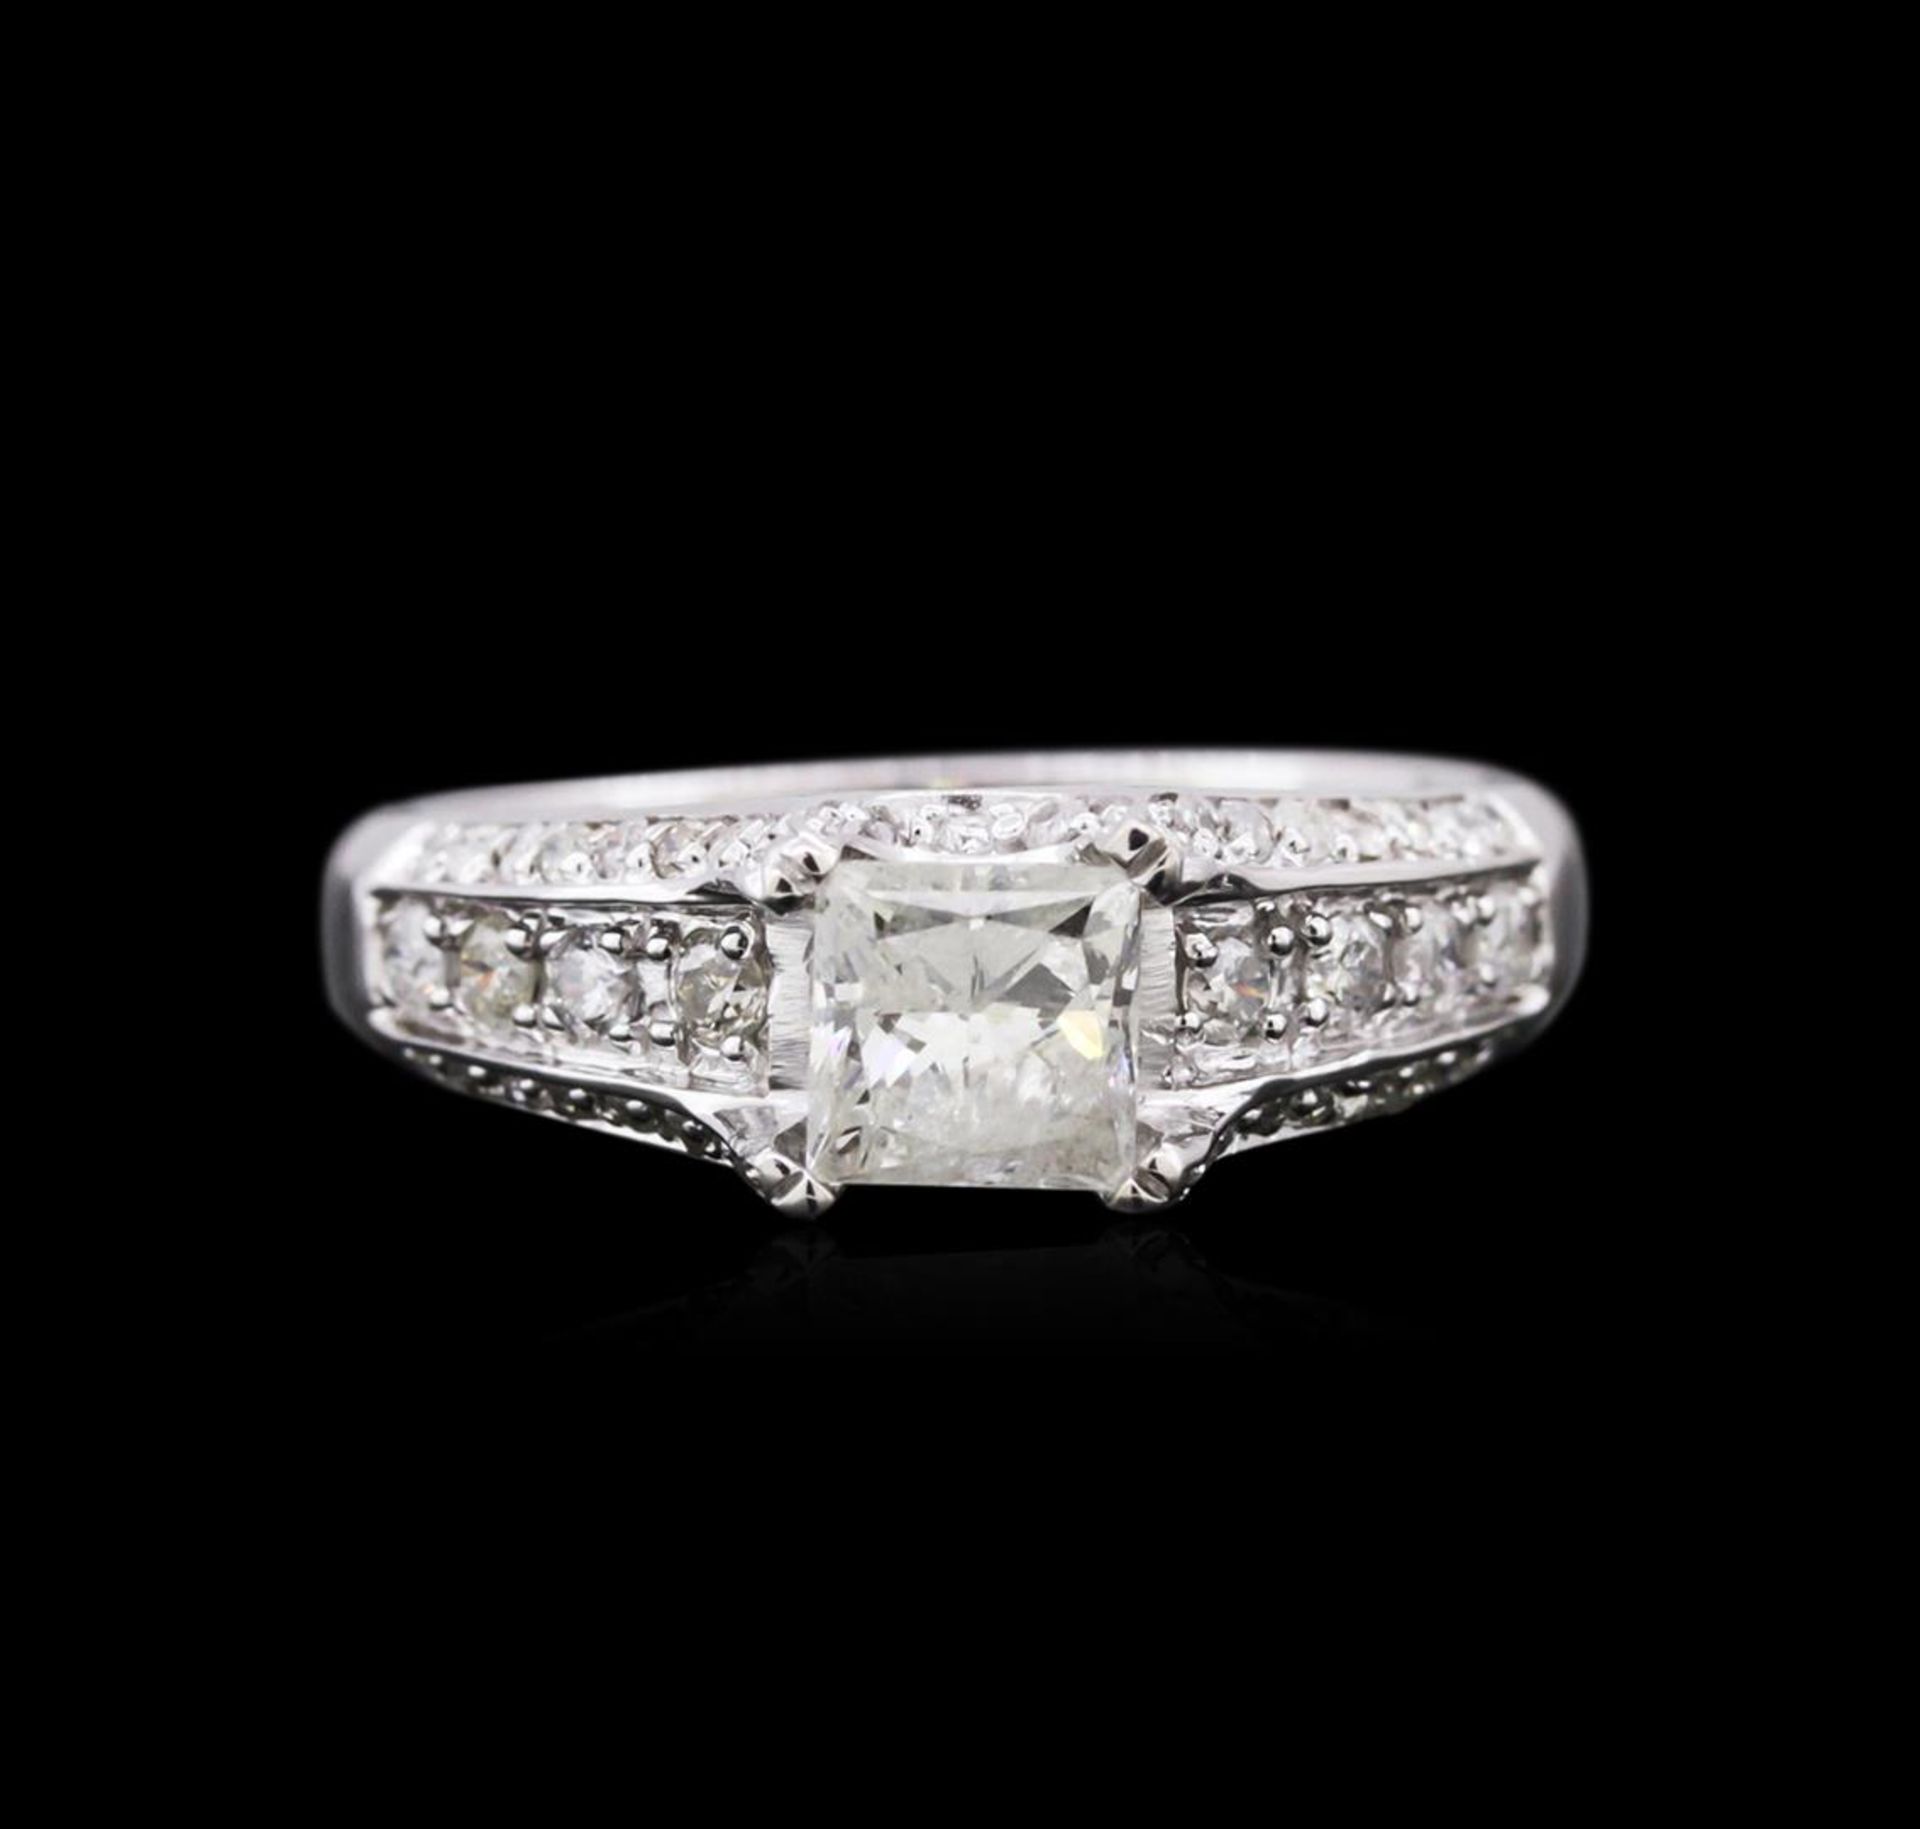 1.55 ctw Diamond Ring - 14KT White Gold - Image 3 of 8